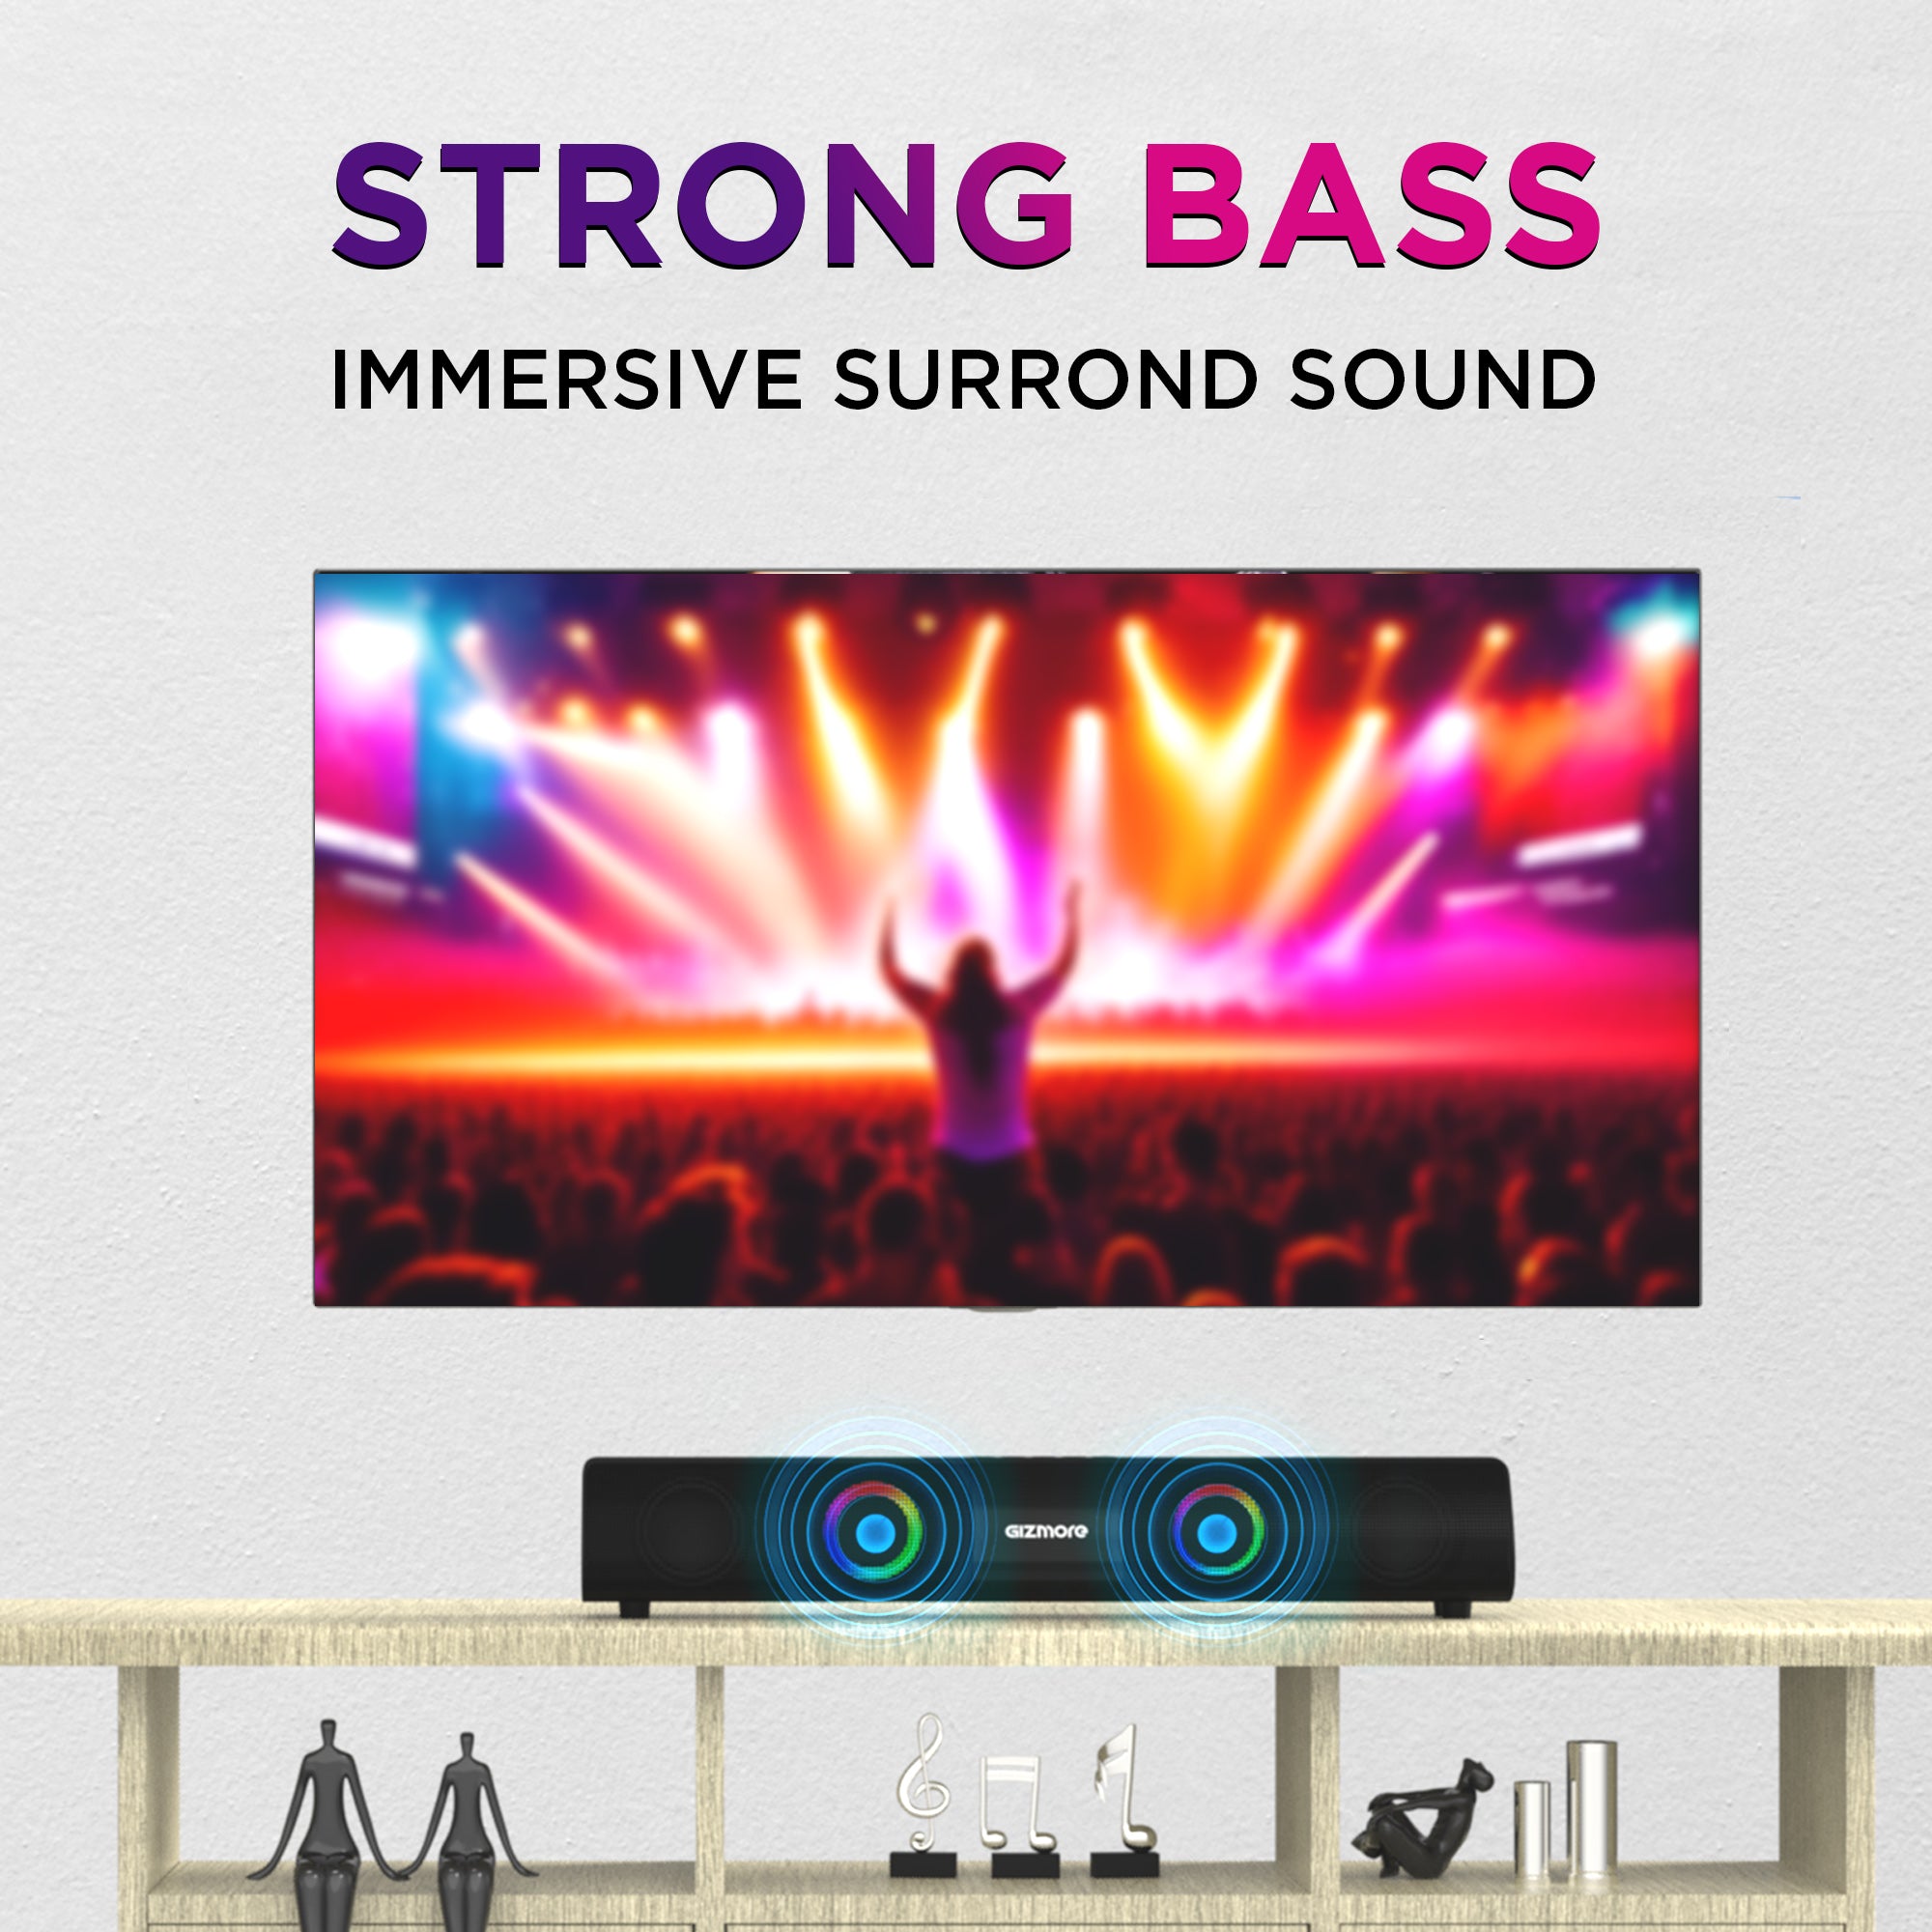 GIZMORE 2000 Soundbar Speaker 20W RMS Powerful Bass Soundbar with Quad & Equalizer Mode, in-Built RGB Light, Immersive Surround Sound, Upto 6 Hrs Playtime , Multi Connectivity AUX/USB/BT/FM/SD Card